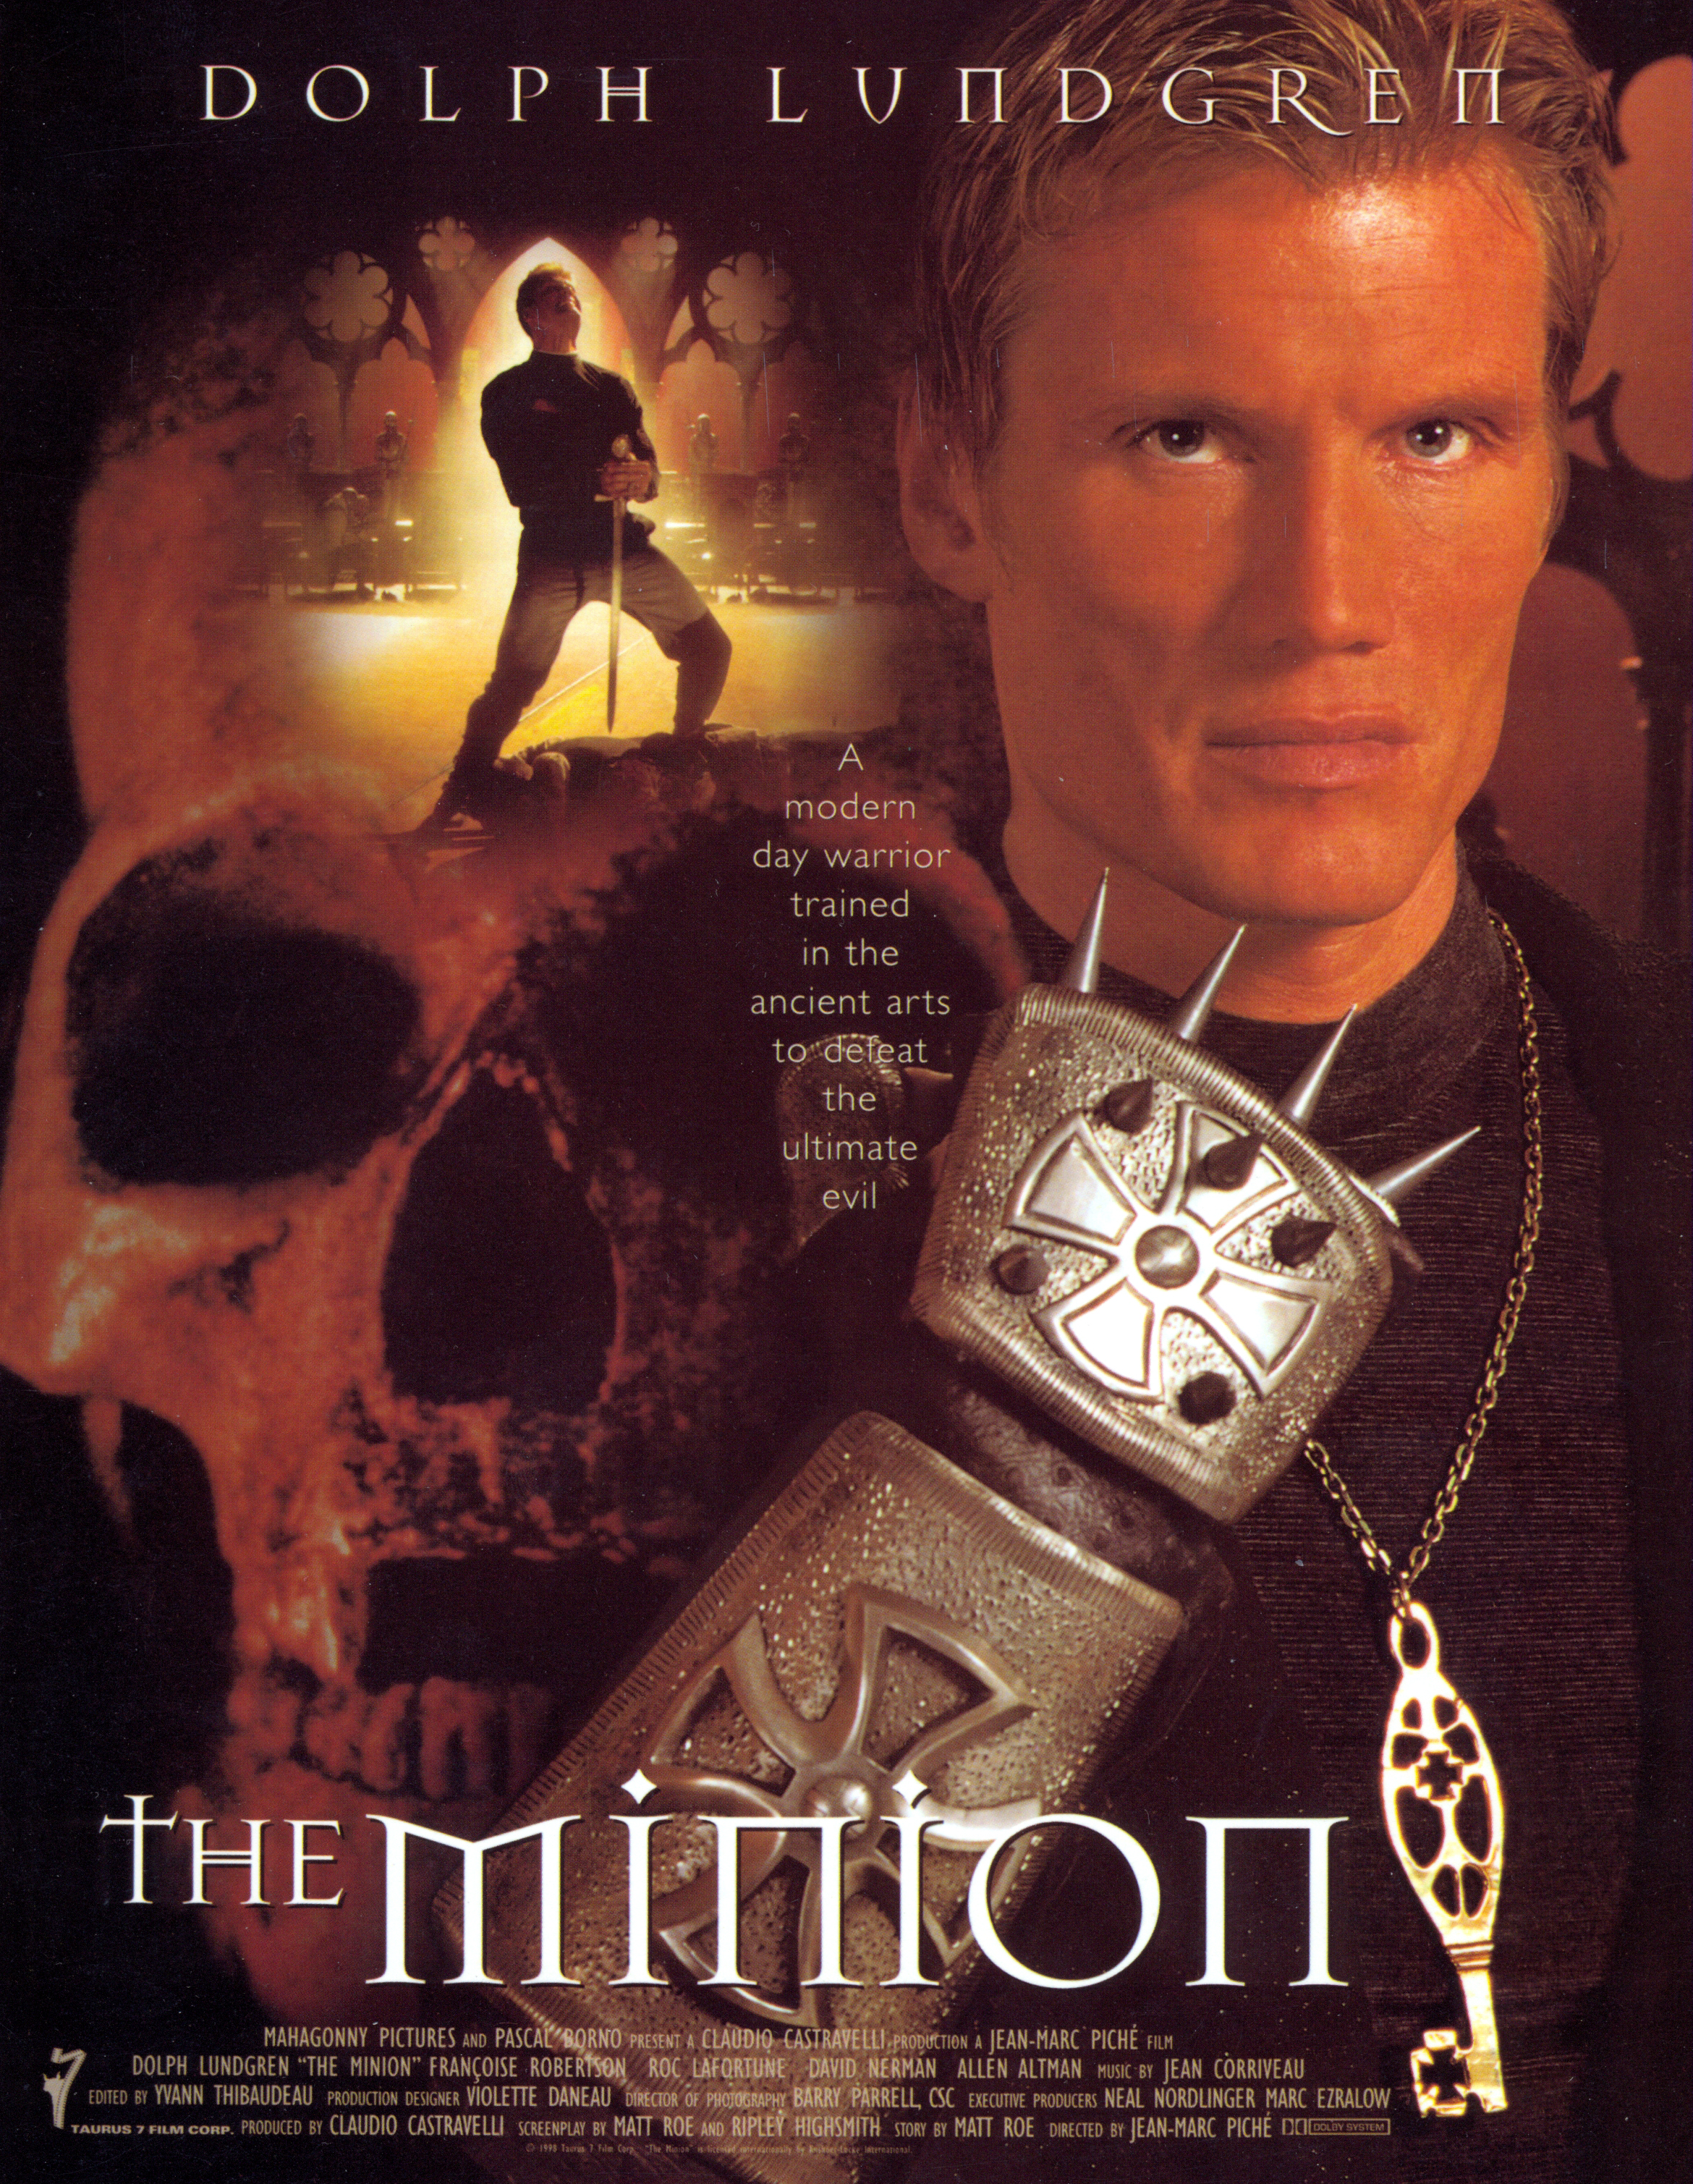 The Minion (1998) starring Dolph Lundgren on DVD on DVD